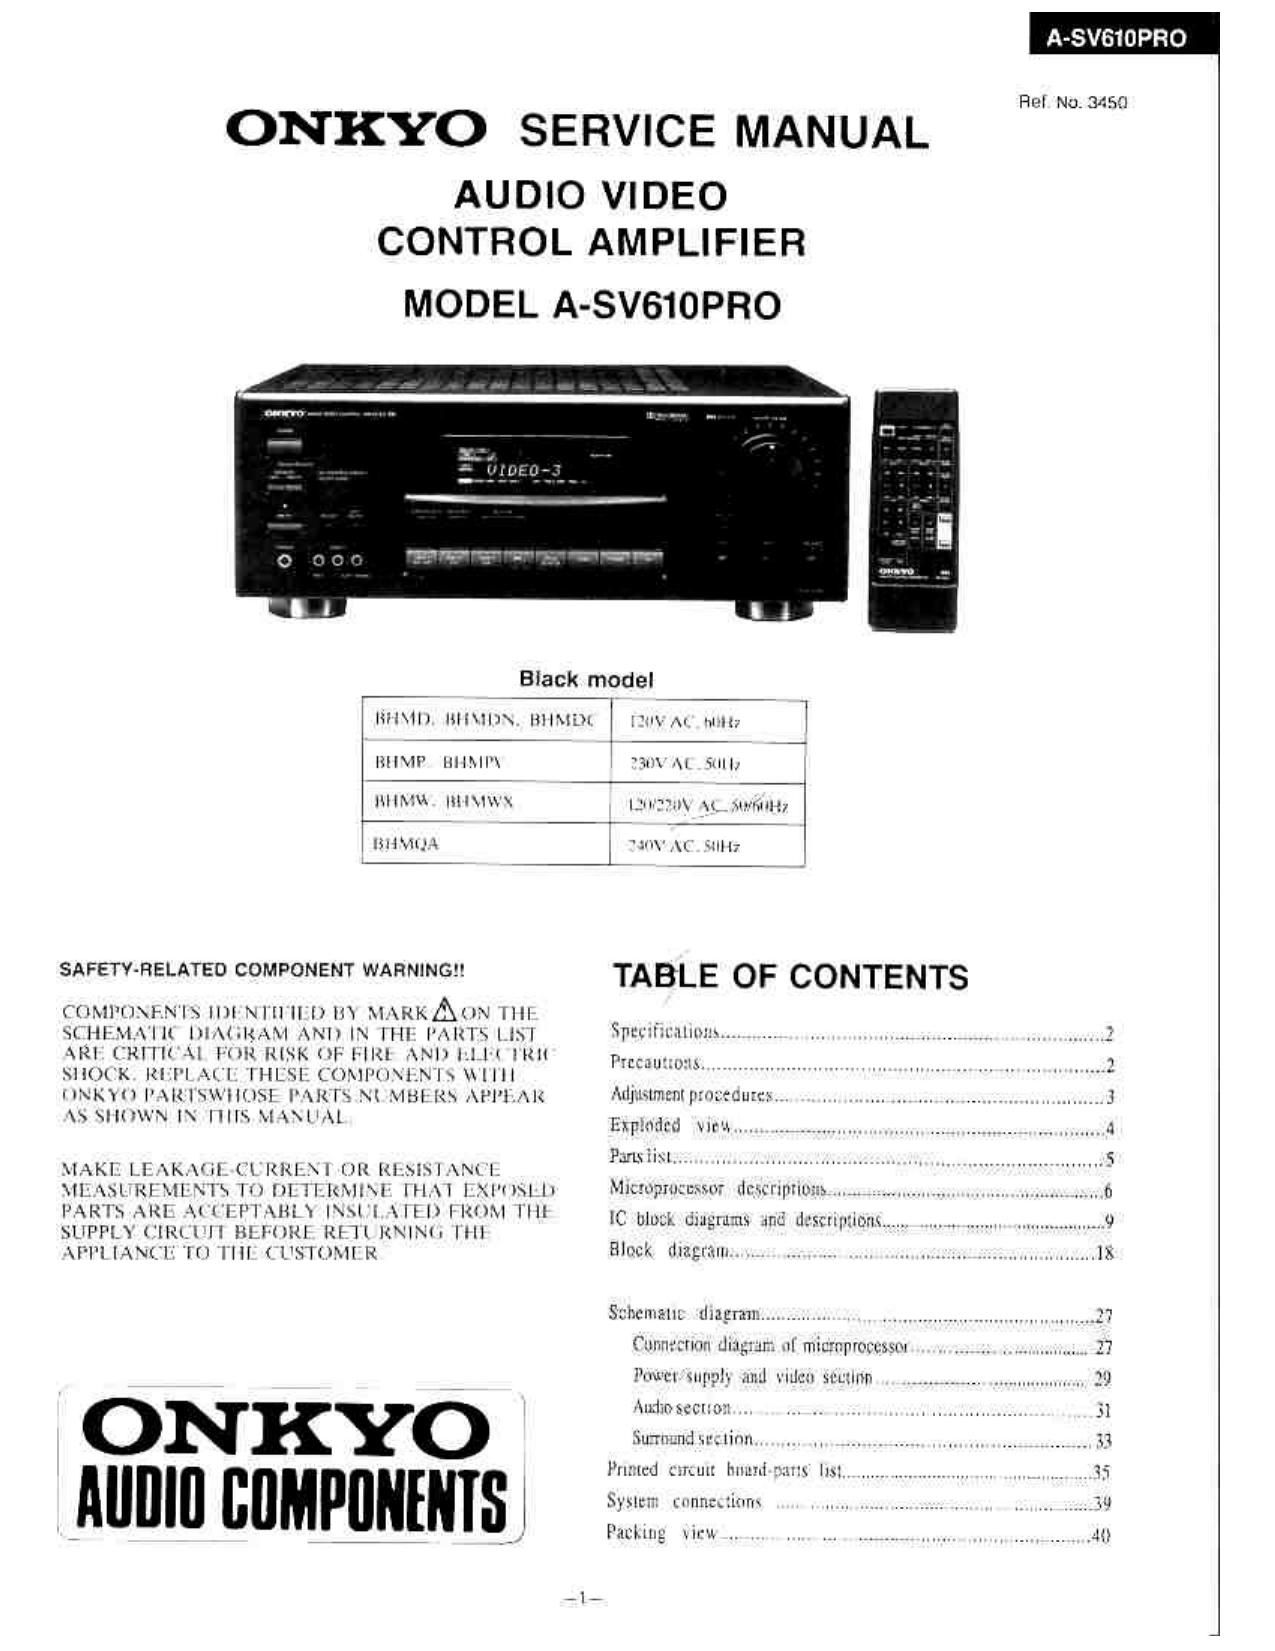 Onkyo ASV 610 PRO Service Manual